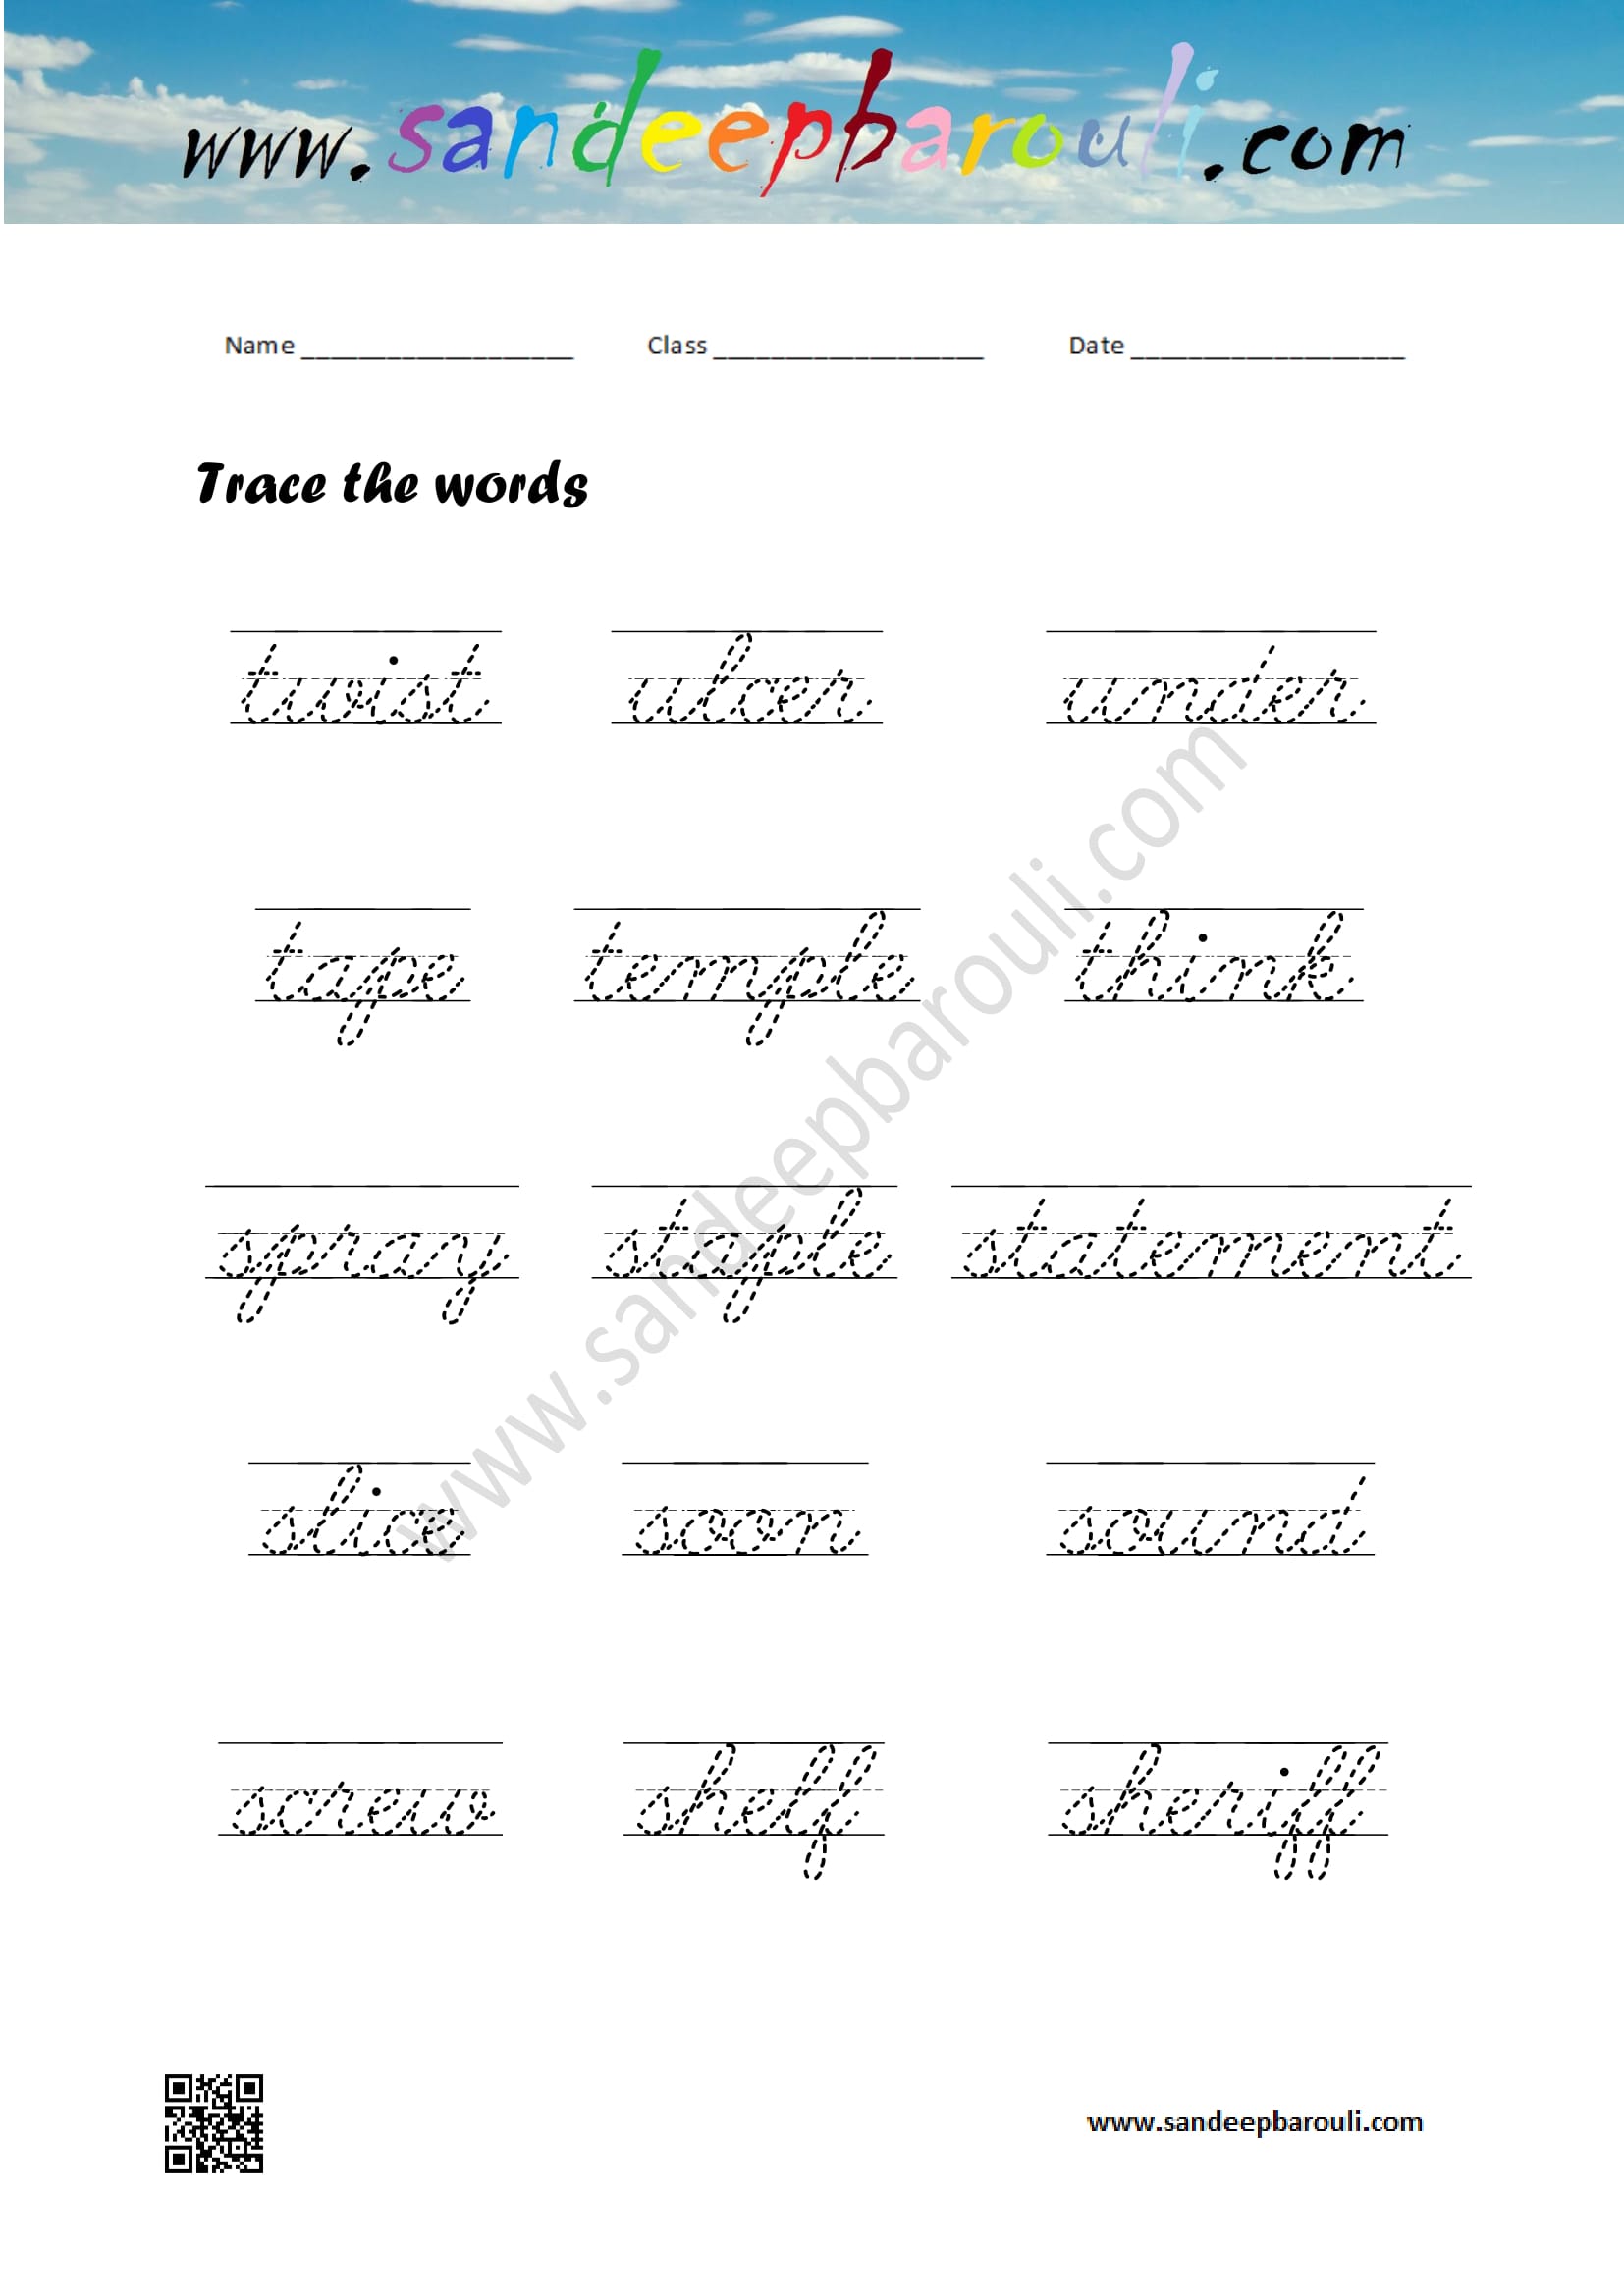 Cursive Writing Worksheet – Trace the words 14 | SandeepBarouli.Com